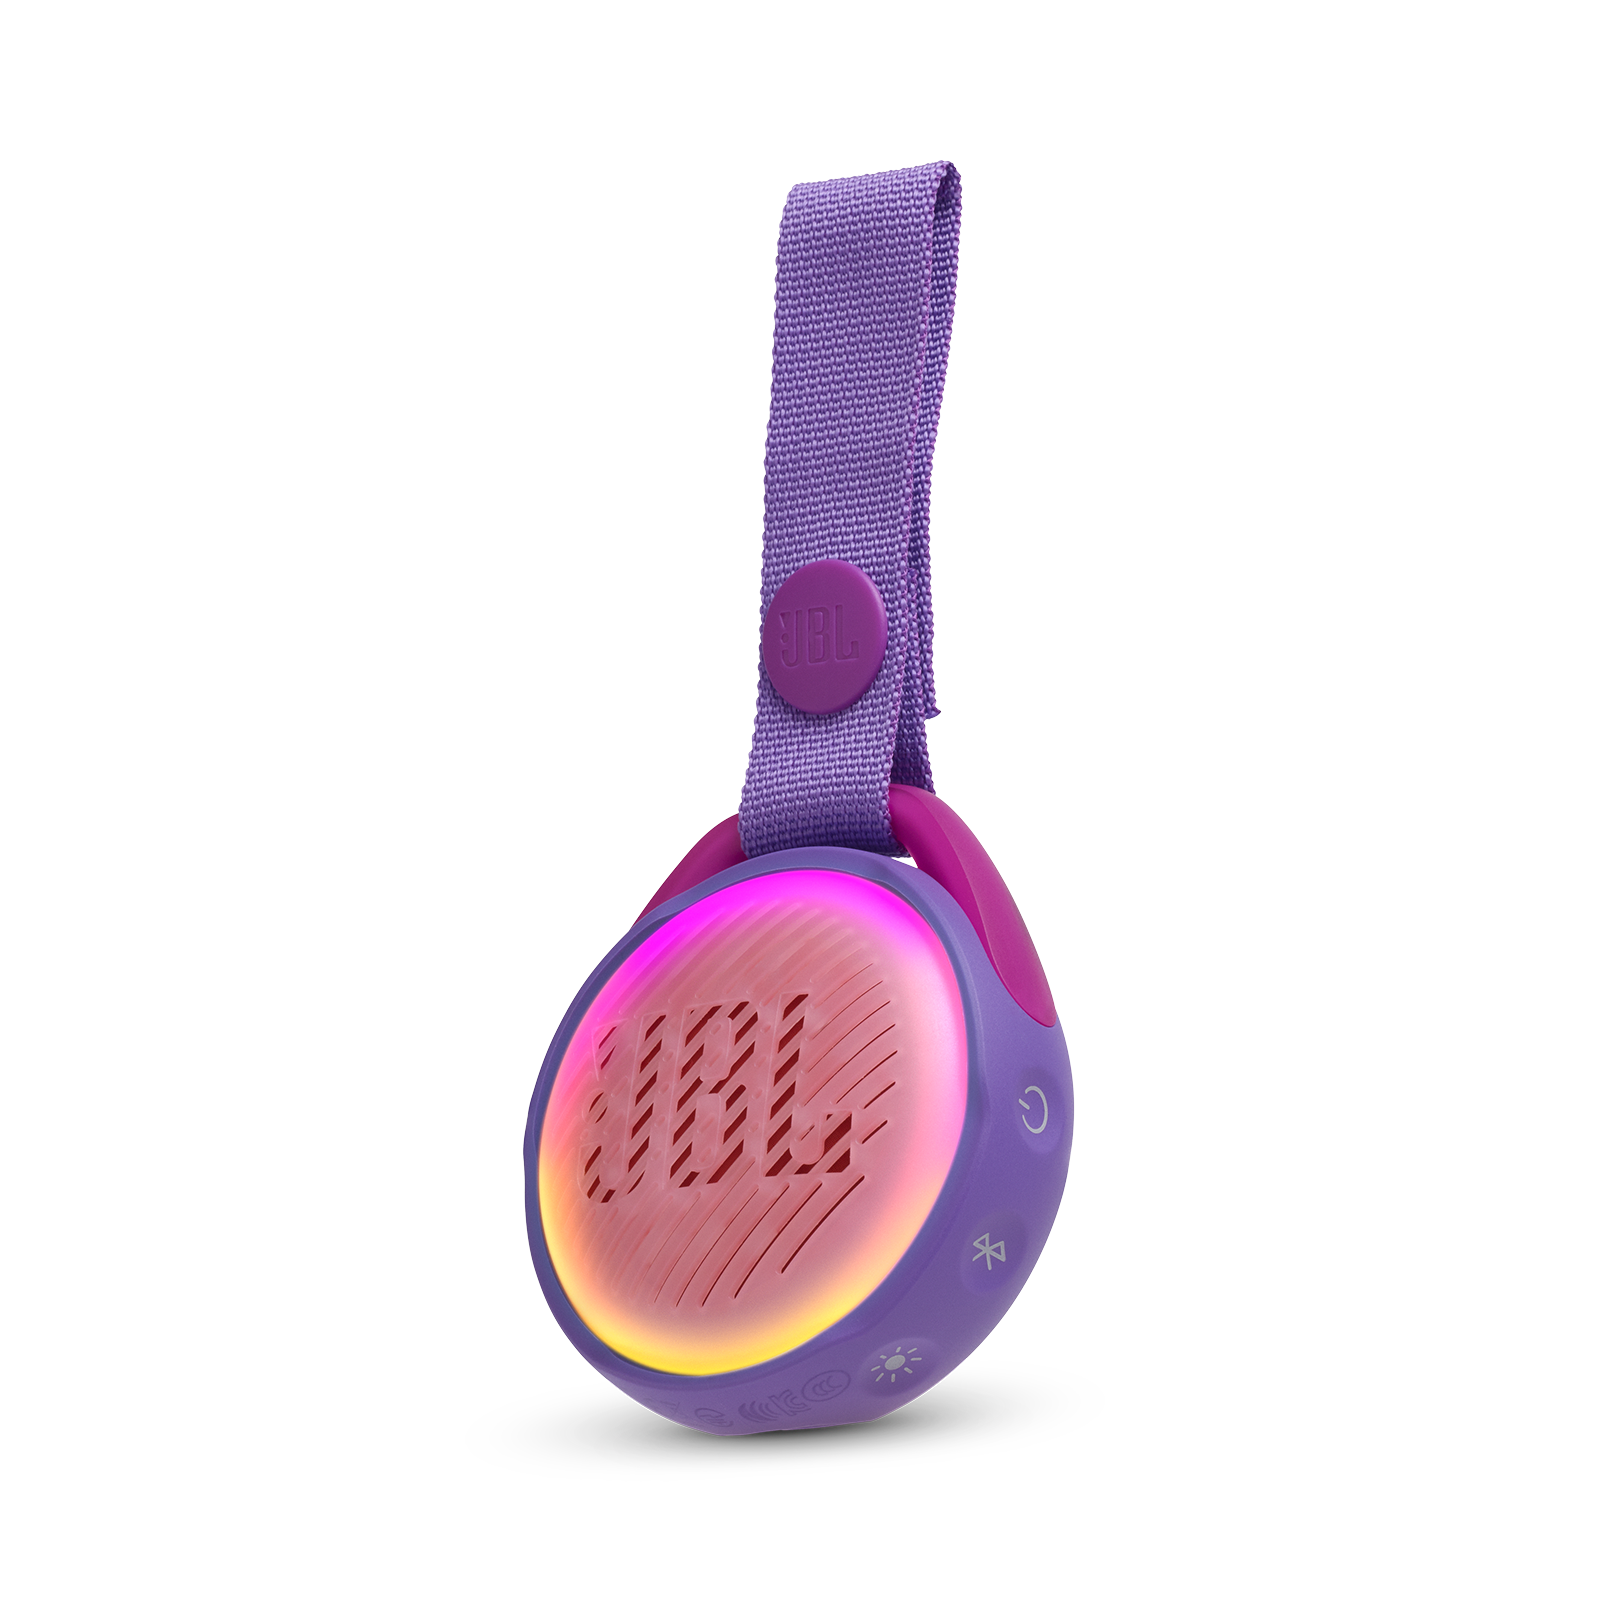 JBL JR Pop - Iris Purple - Portable speaker for kids - Hero